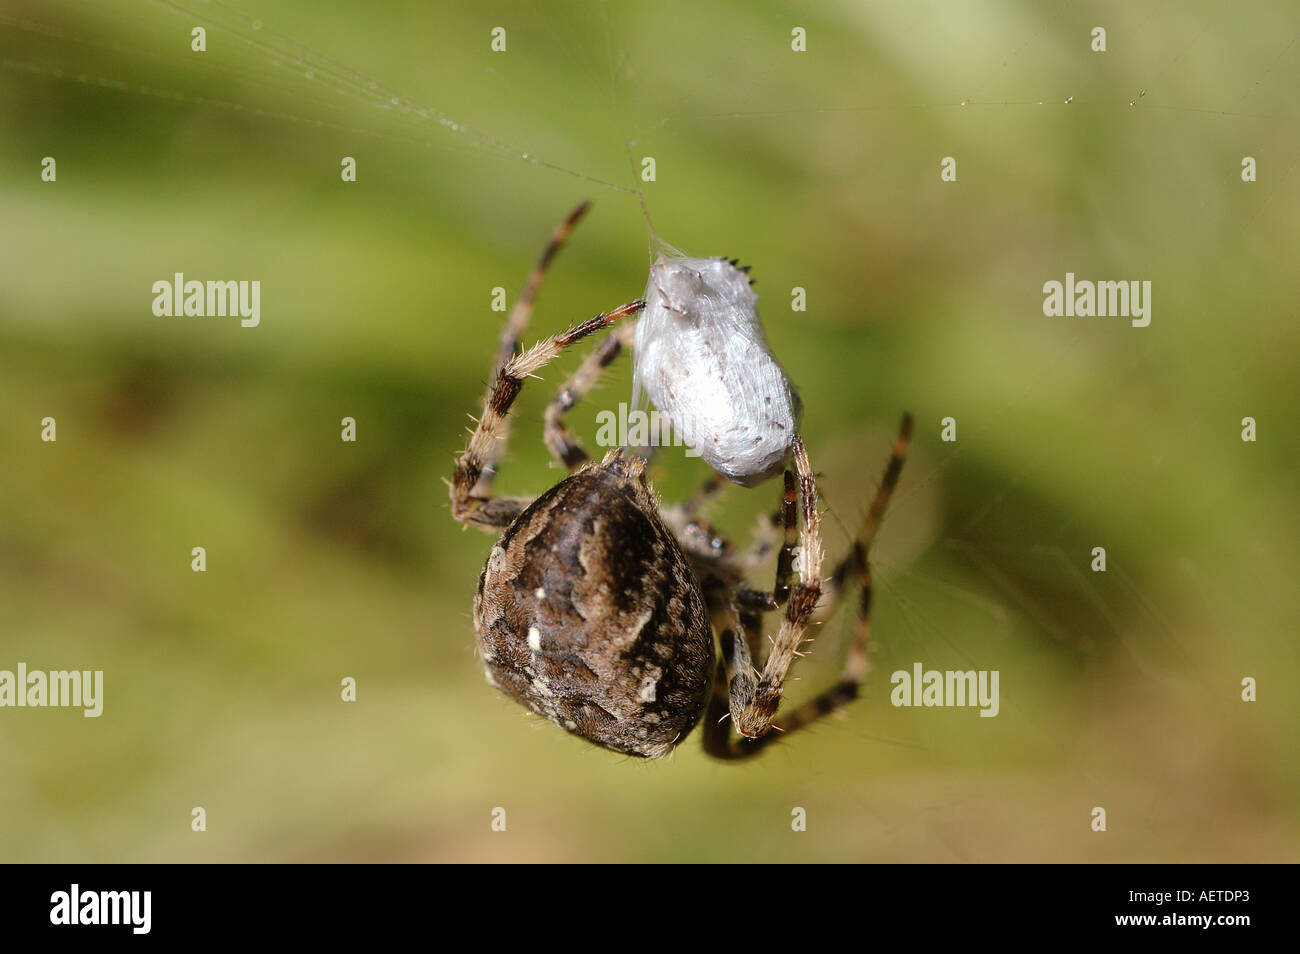 Garden spider female Araneus diadematus Araneidae wrapping a fly caught in her web UK Stock Photo